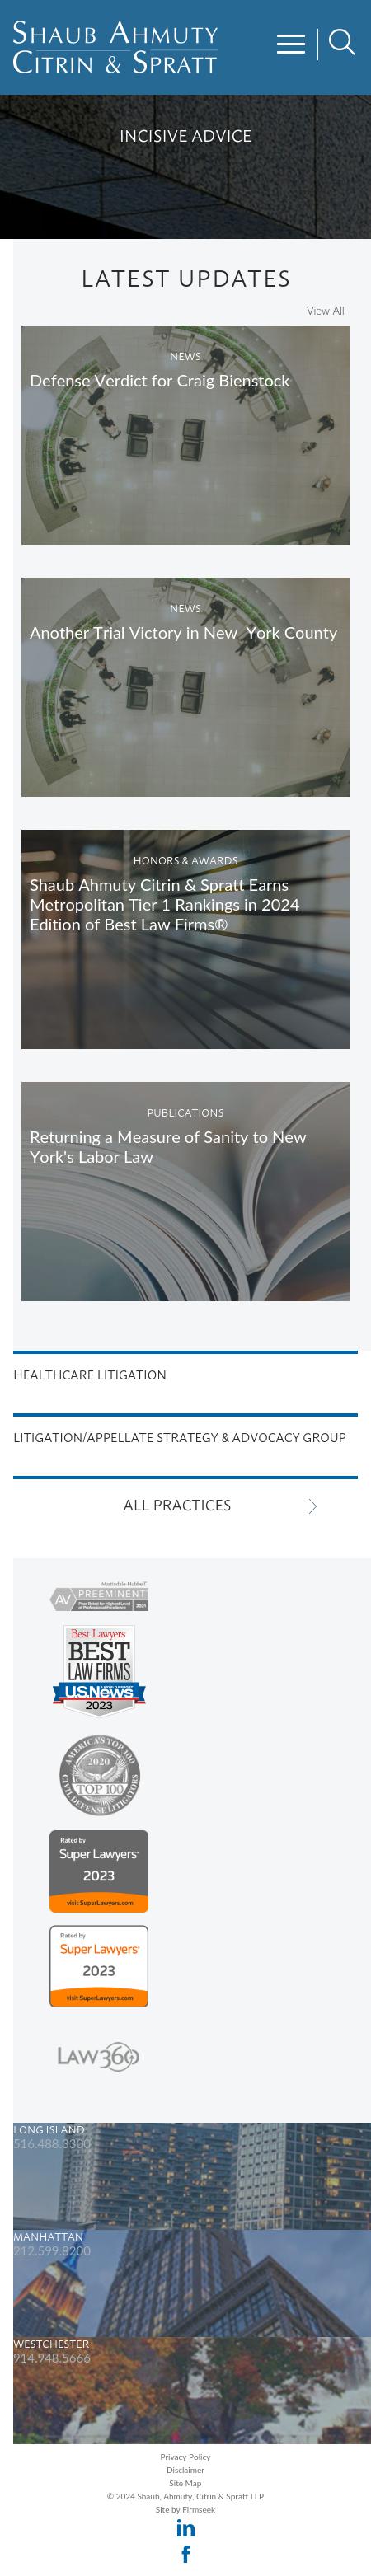 Shaub, Ahmuty, Citrin & Spratt - New York NY Lawyers